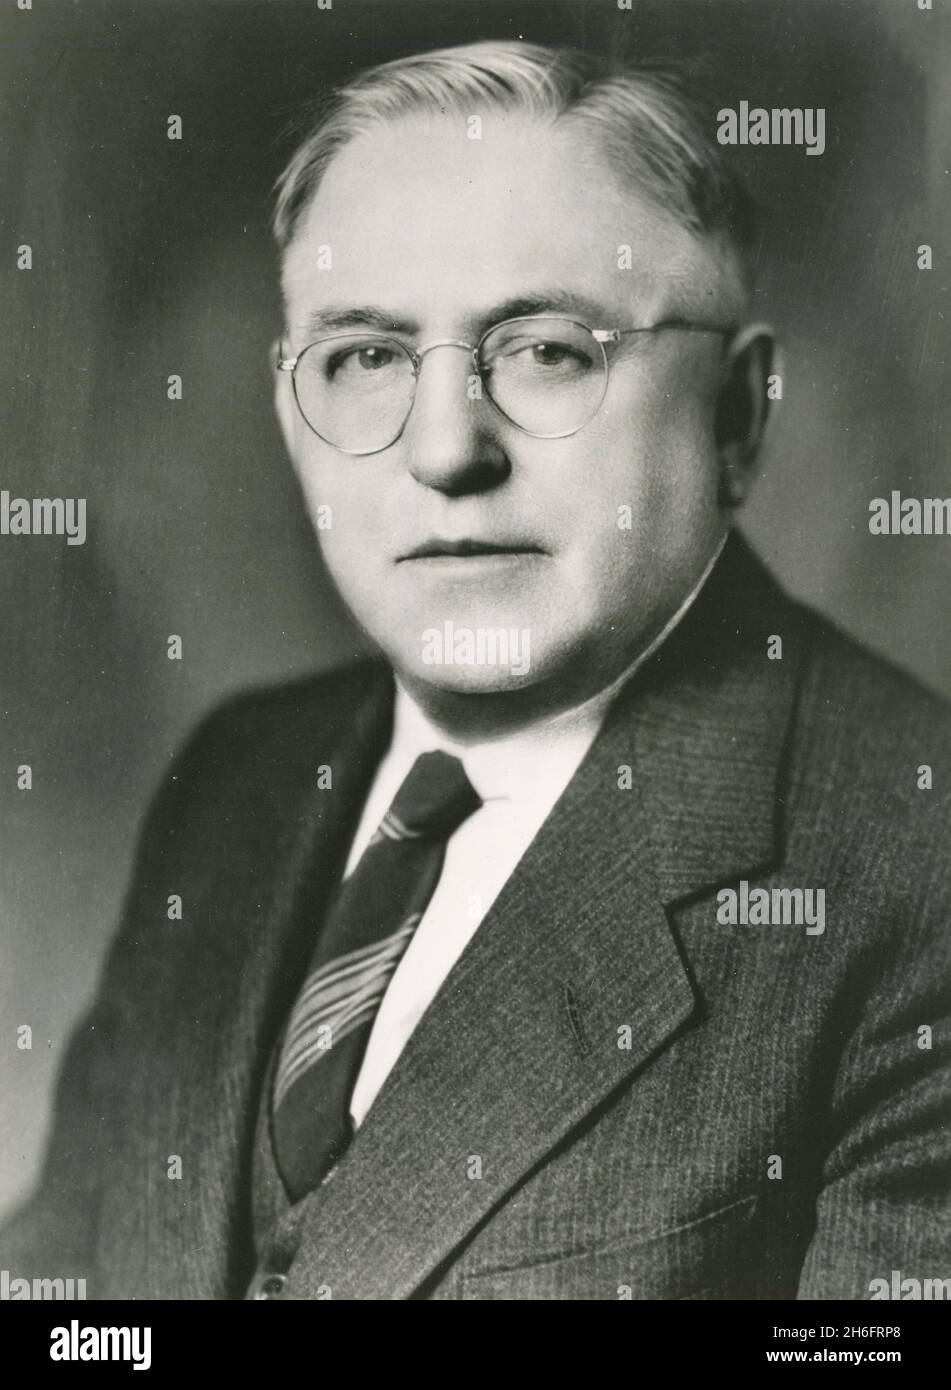 Allan S. Haywood, Executive Vice-president of the Congress of Industrial Organizations (CIO), USA 1949 Stock Photo